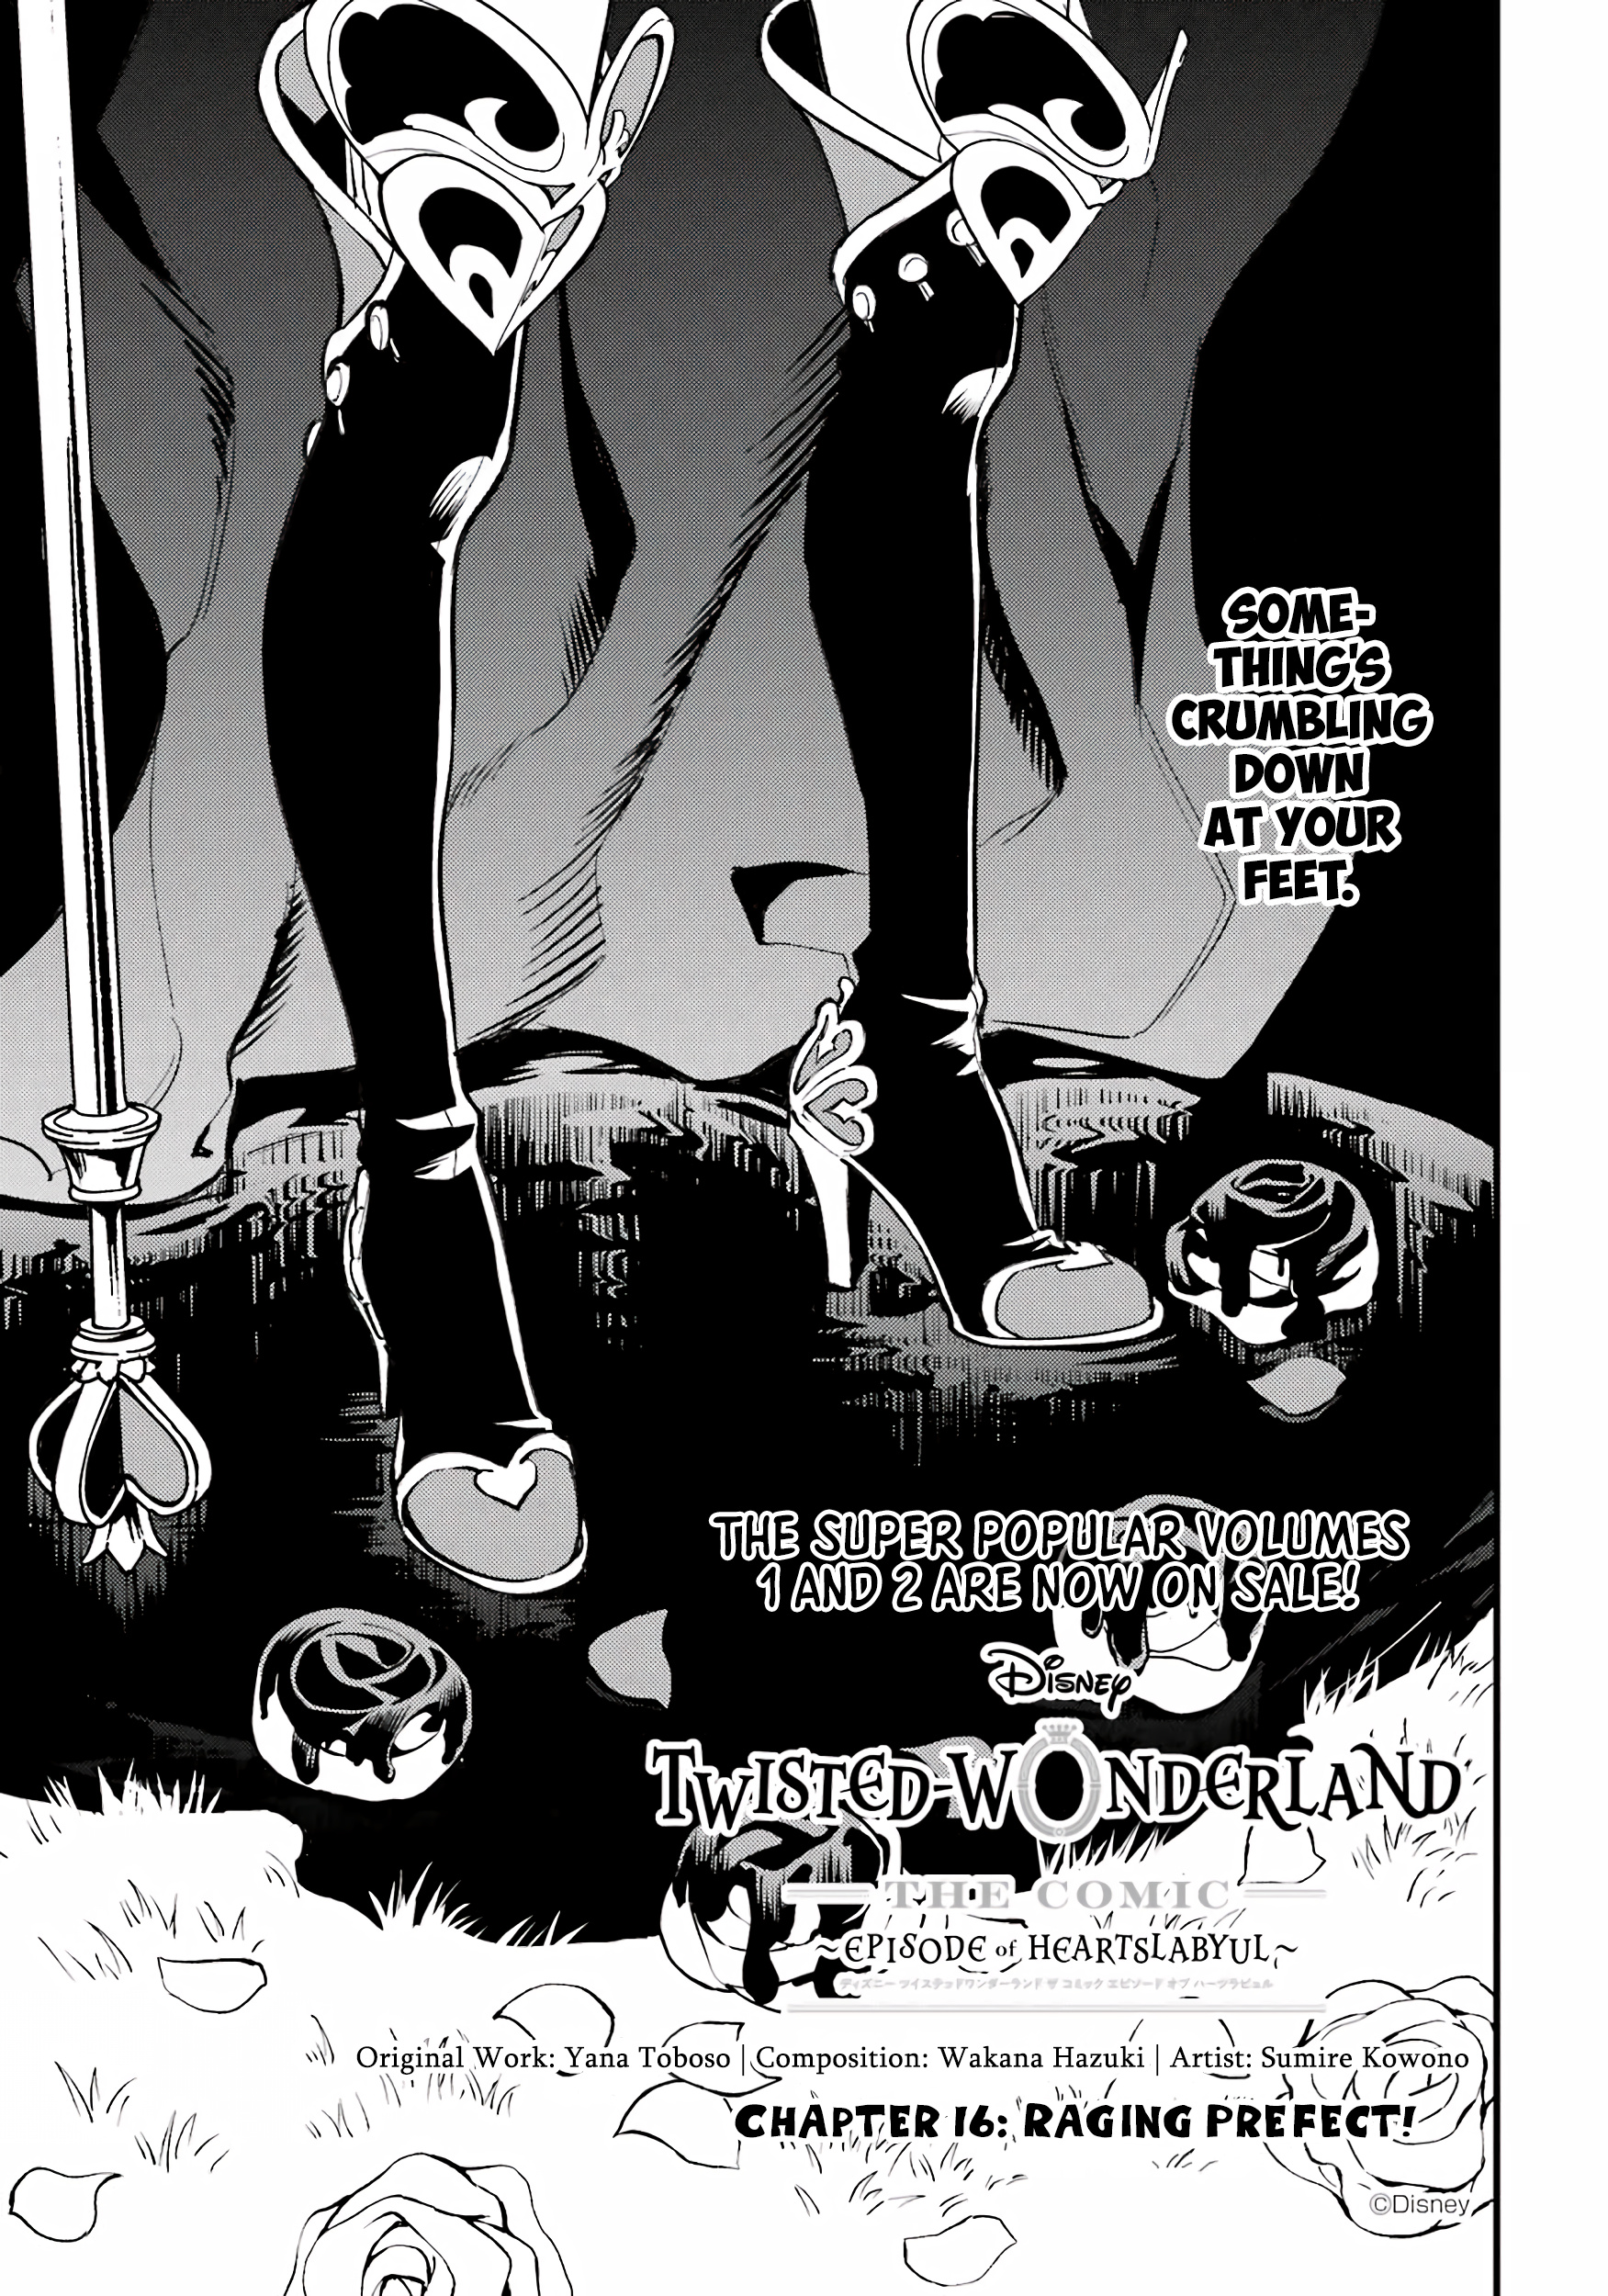 Disney Twisted Wonderland - The Comic - ~Episode Of Heartslabyul~ Chapter 16 #1